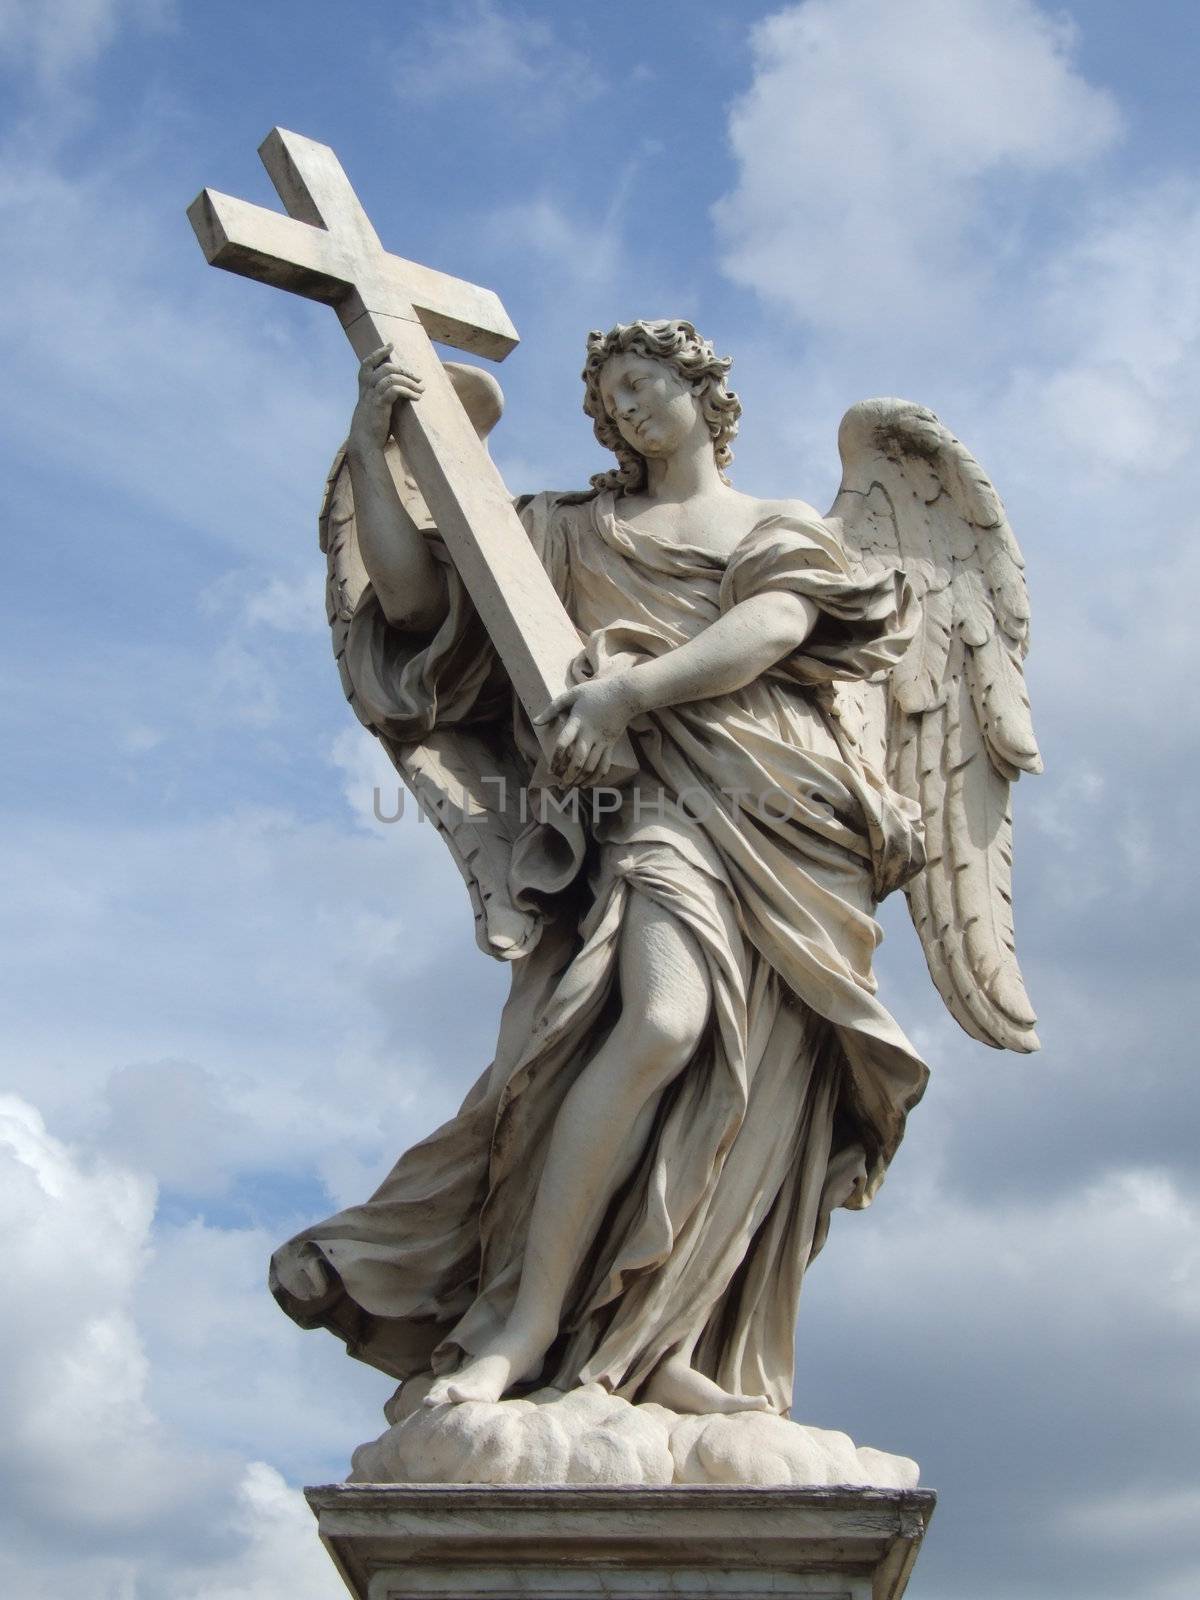 Beautiful angel statue on a bridge in Rome.